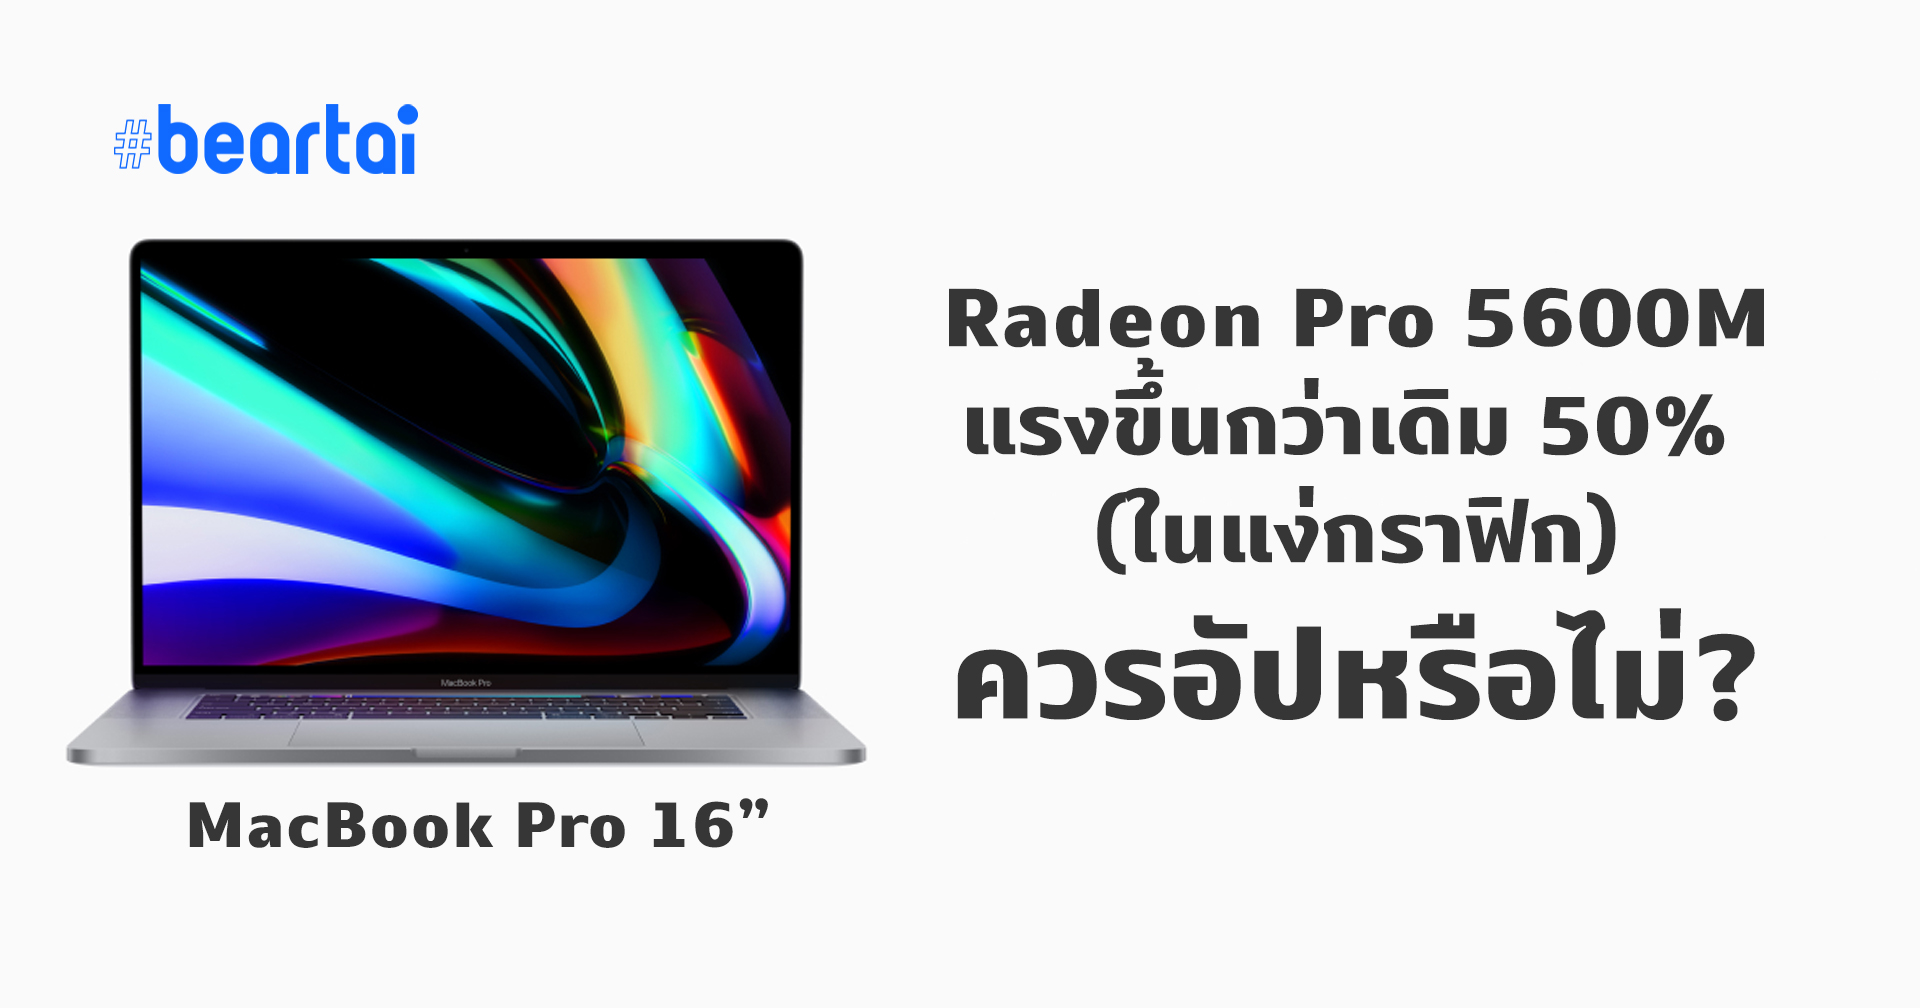 AMD Radeon Pro 5600M ใน MacBook Pro 16″ แรงกว่ารุ่นพื้นฐาน ถึง 50% ควรหรือไม่ควรอัปเกรด มาดู!